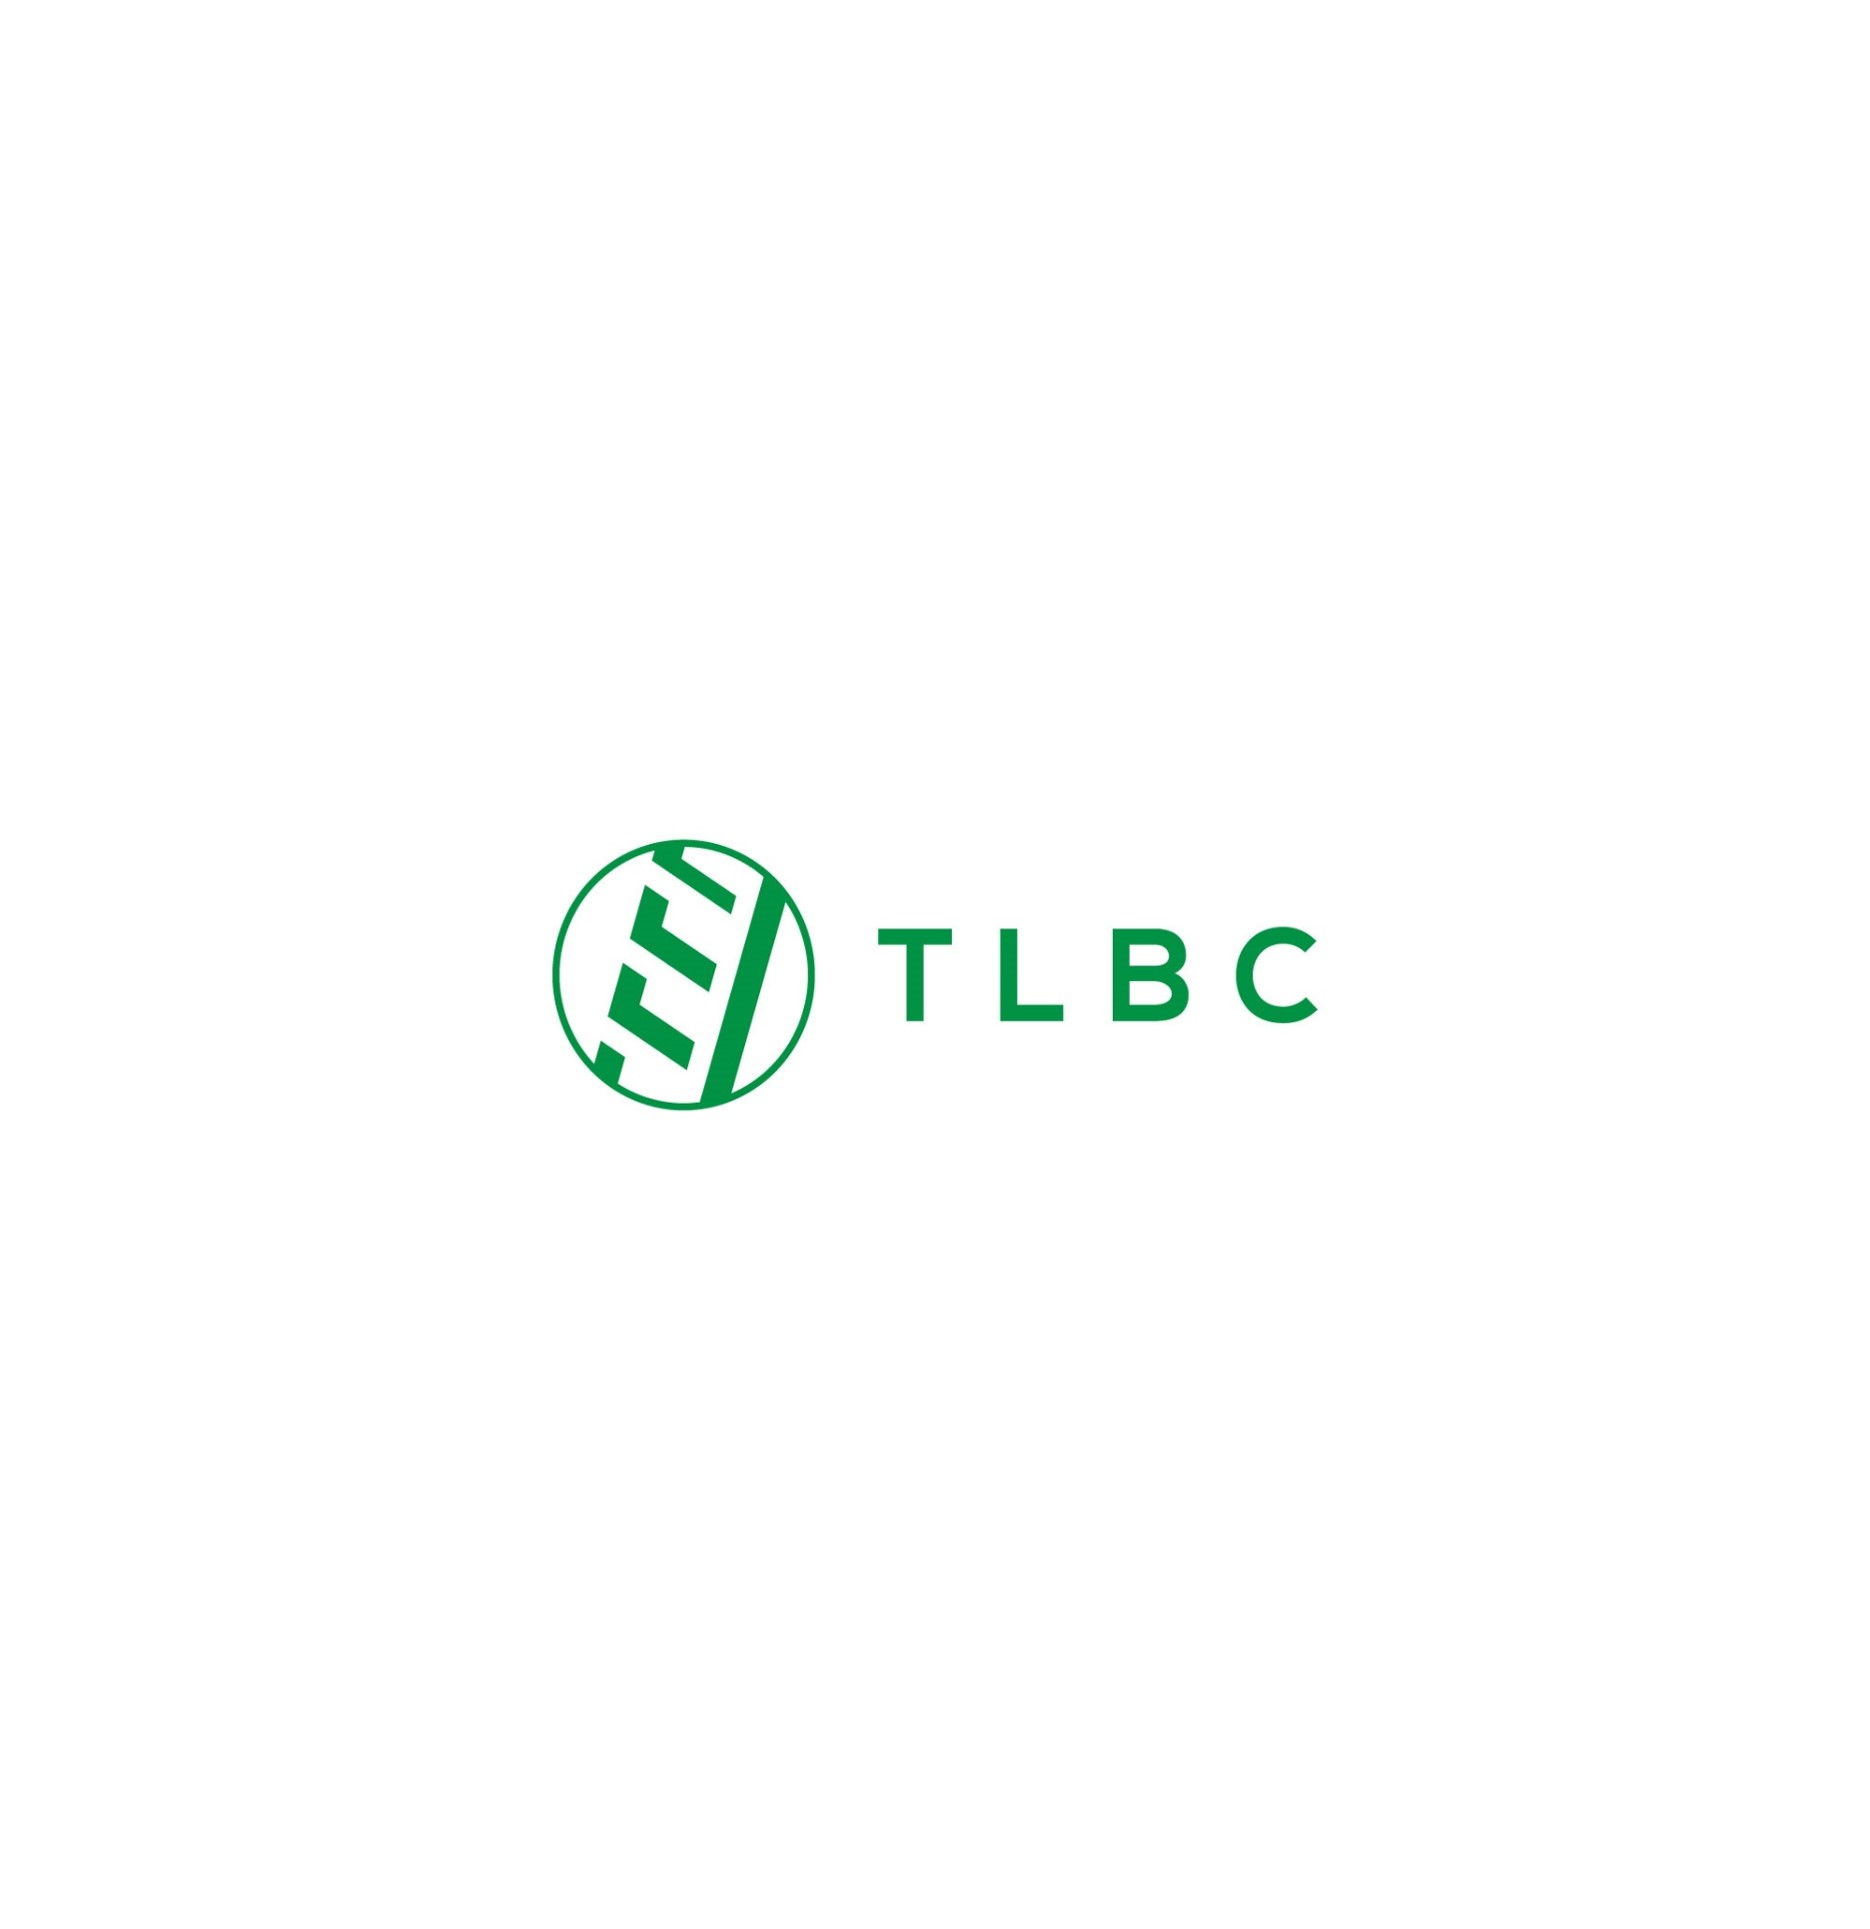 TLBC